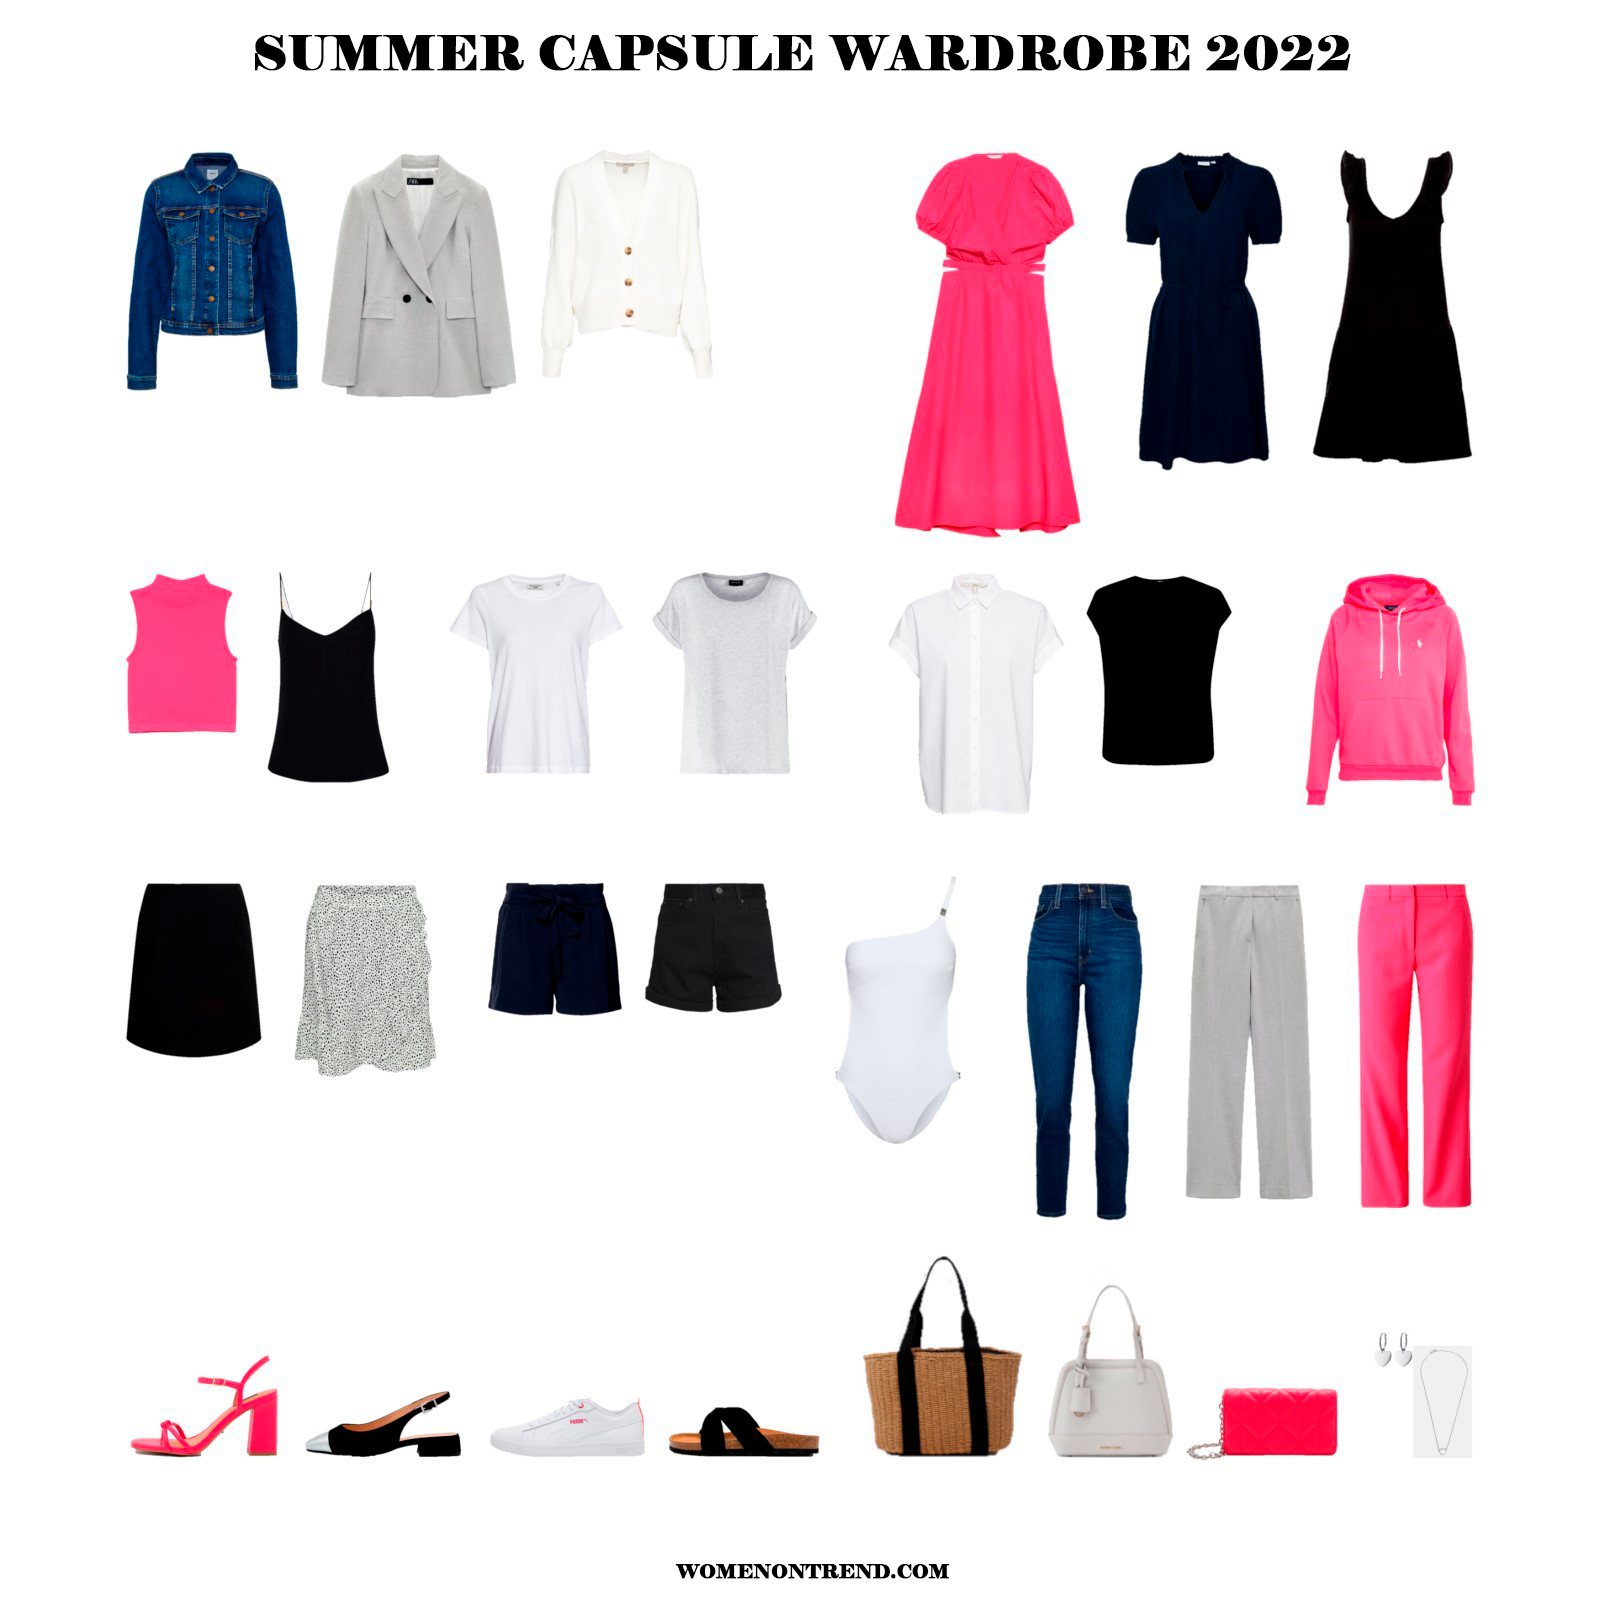 Summer Capsule Wardrobe 2022